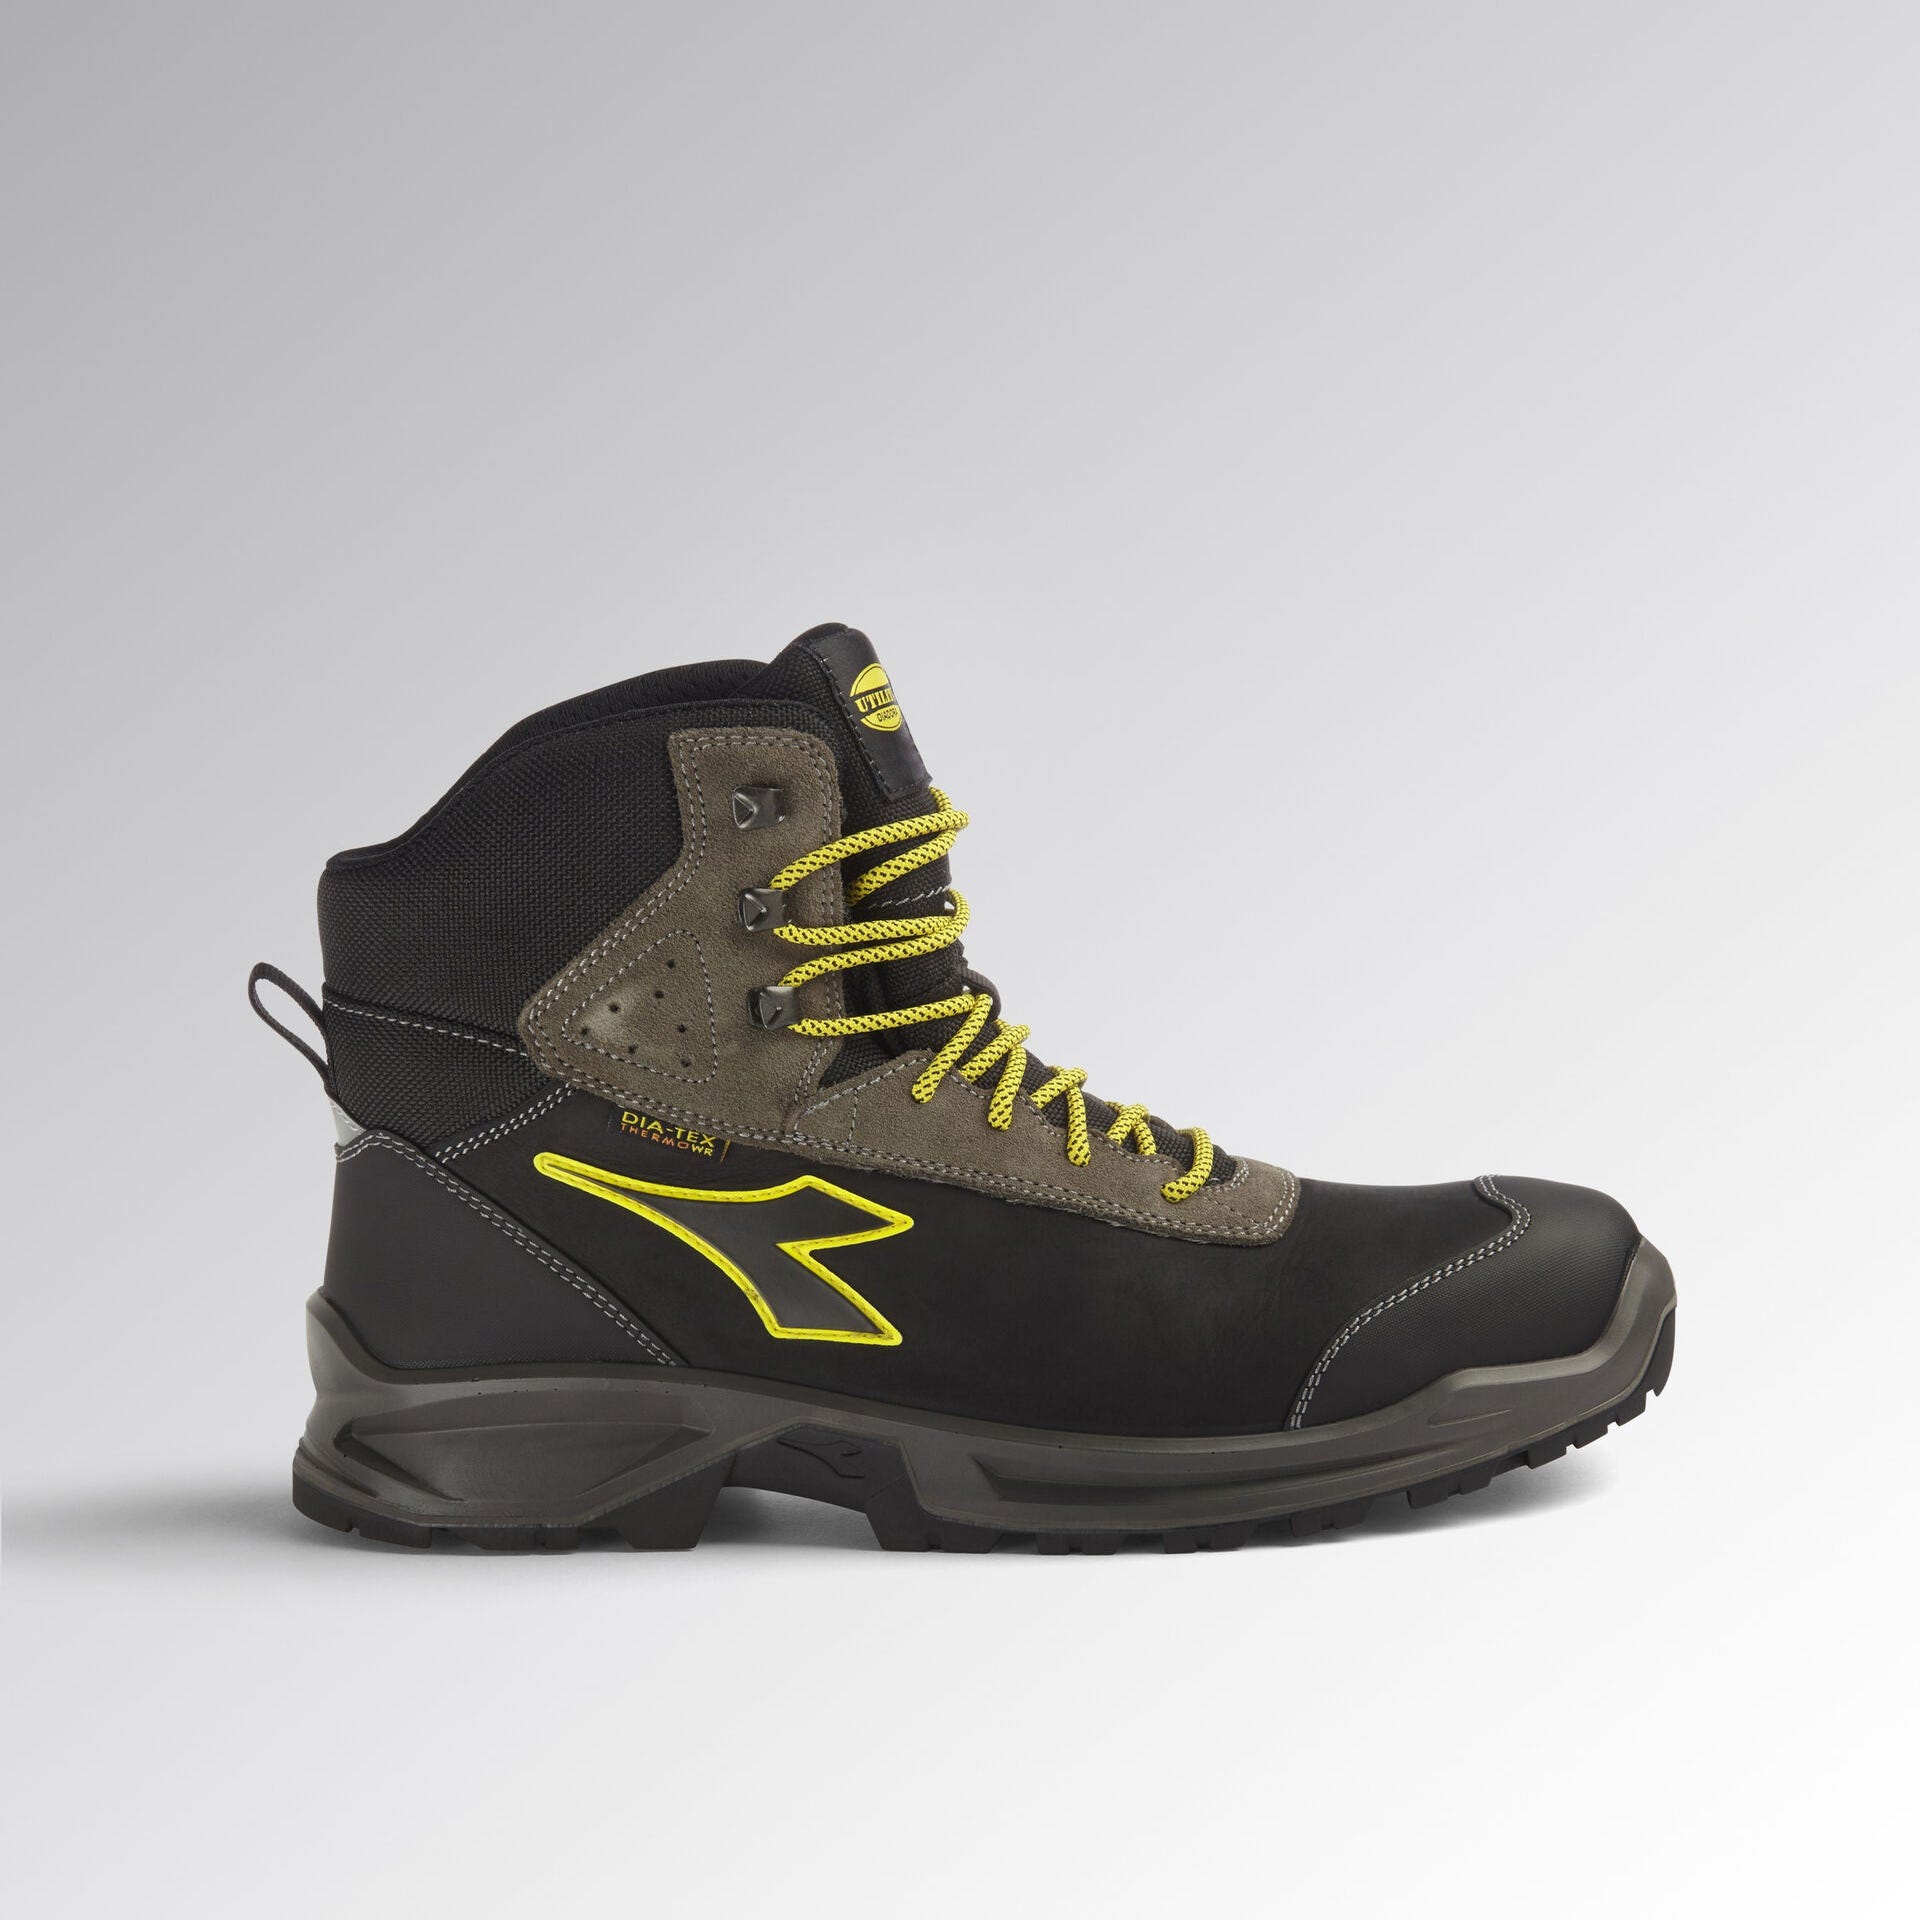 Chaussures S3 imperméables thermo-isolantes Diadora Noir / Jaune 43 5